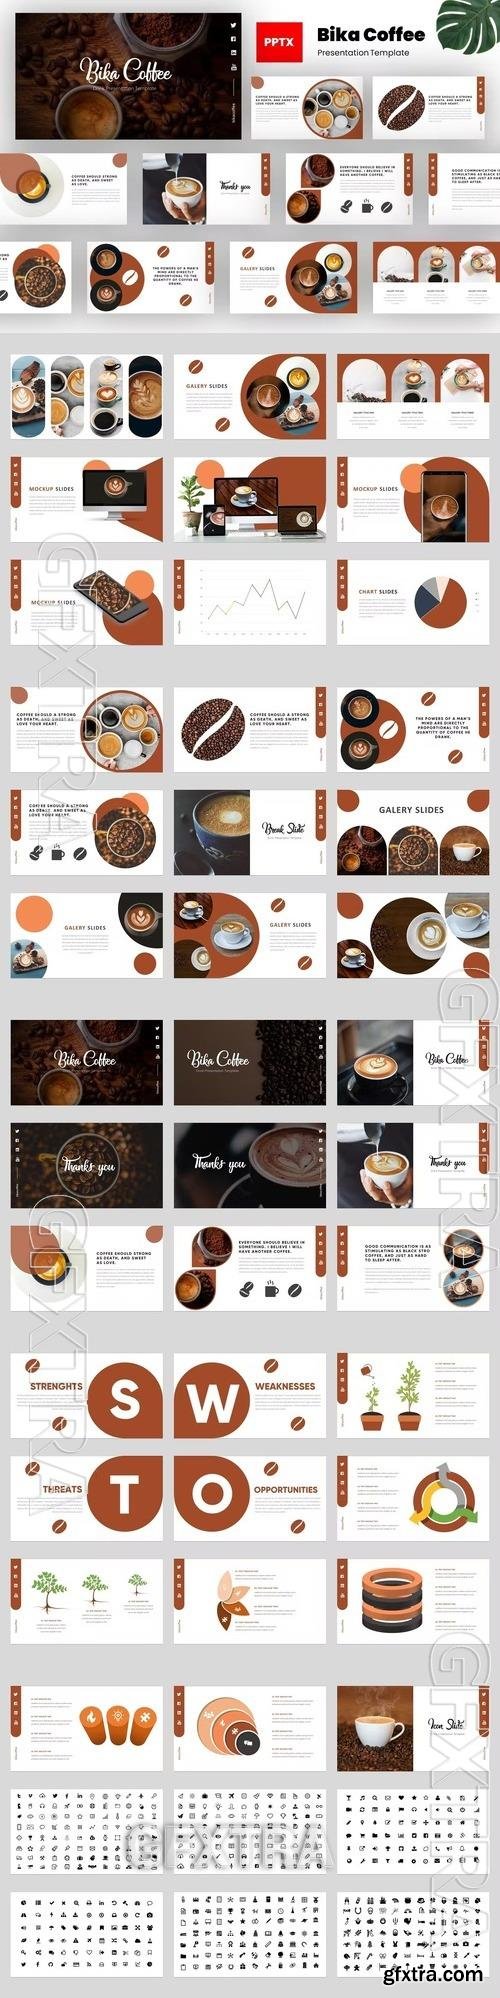 Bika Coffee - Coffee Shop Powerpoint Template GK2XDF5